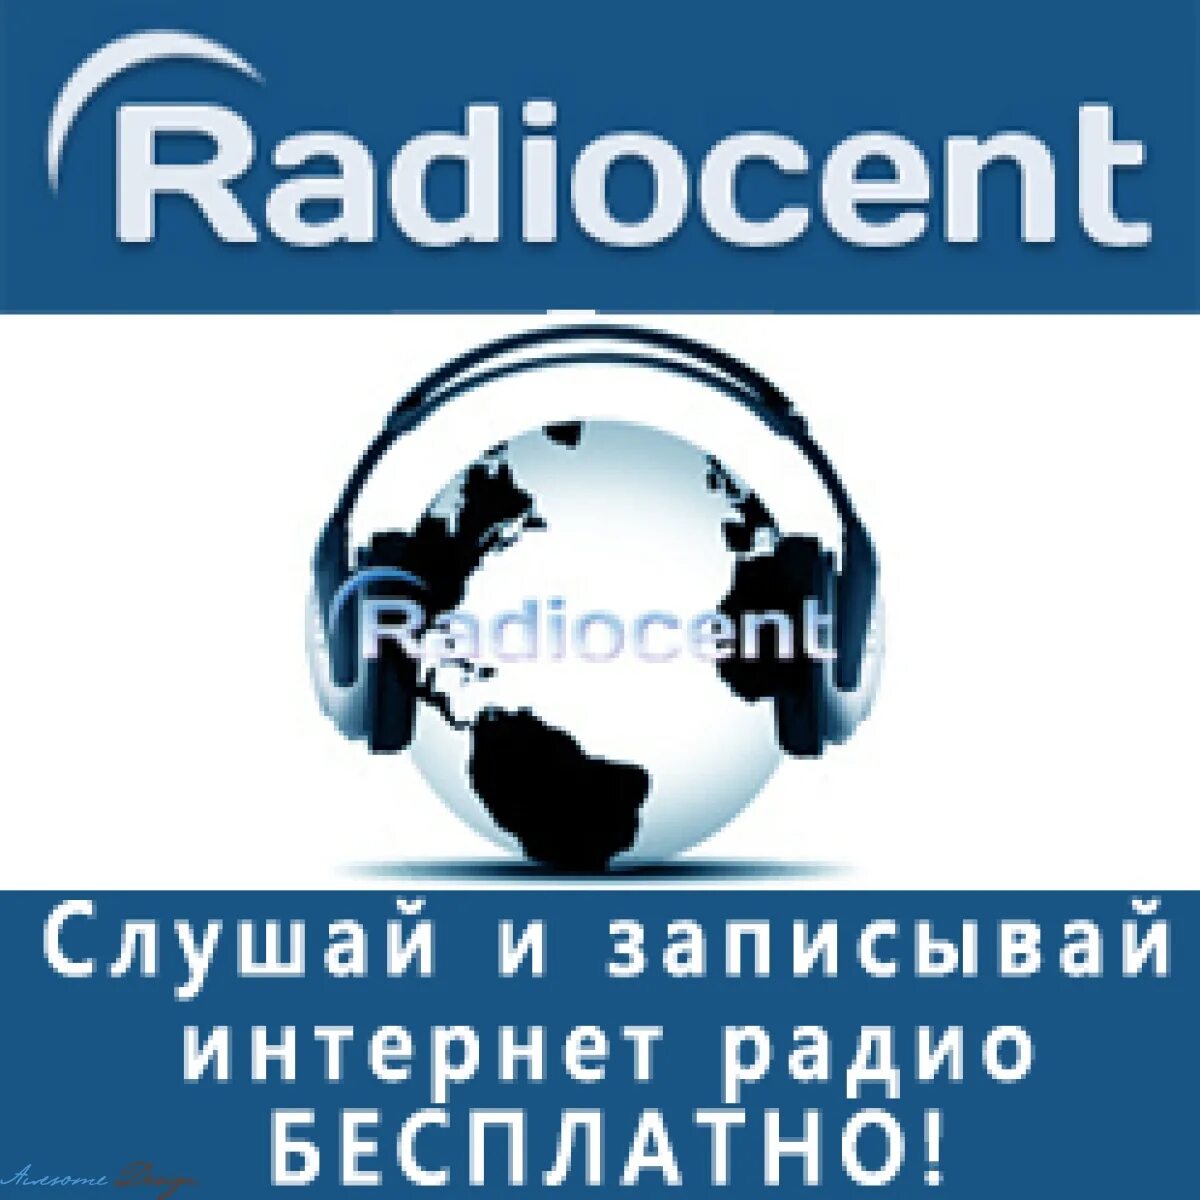 Radiocent. Radio Center. Radiocent logo.